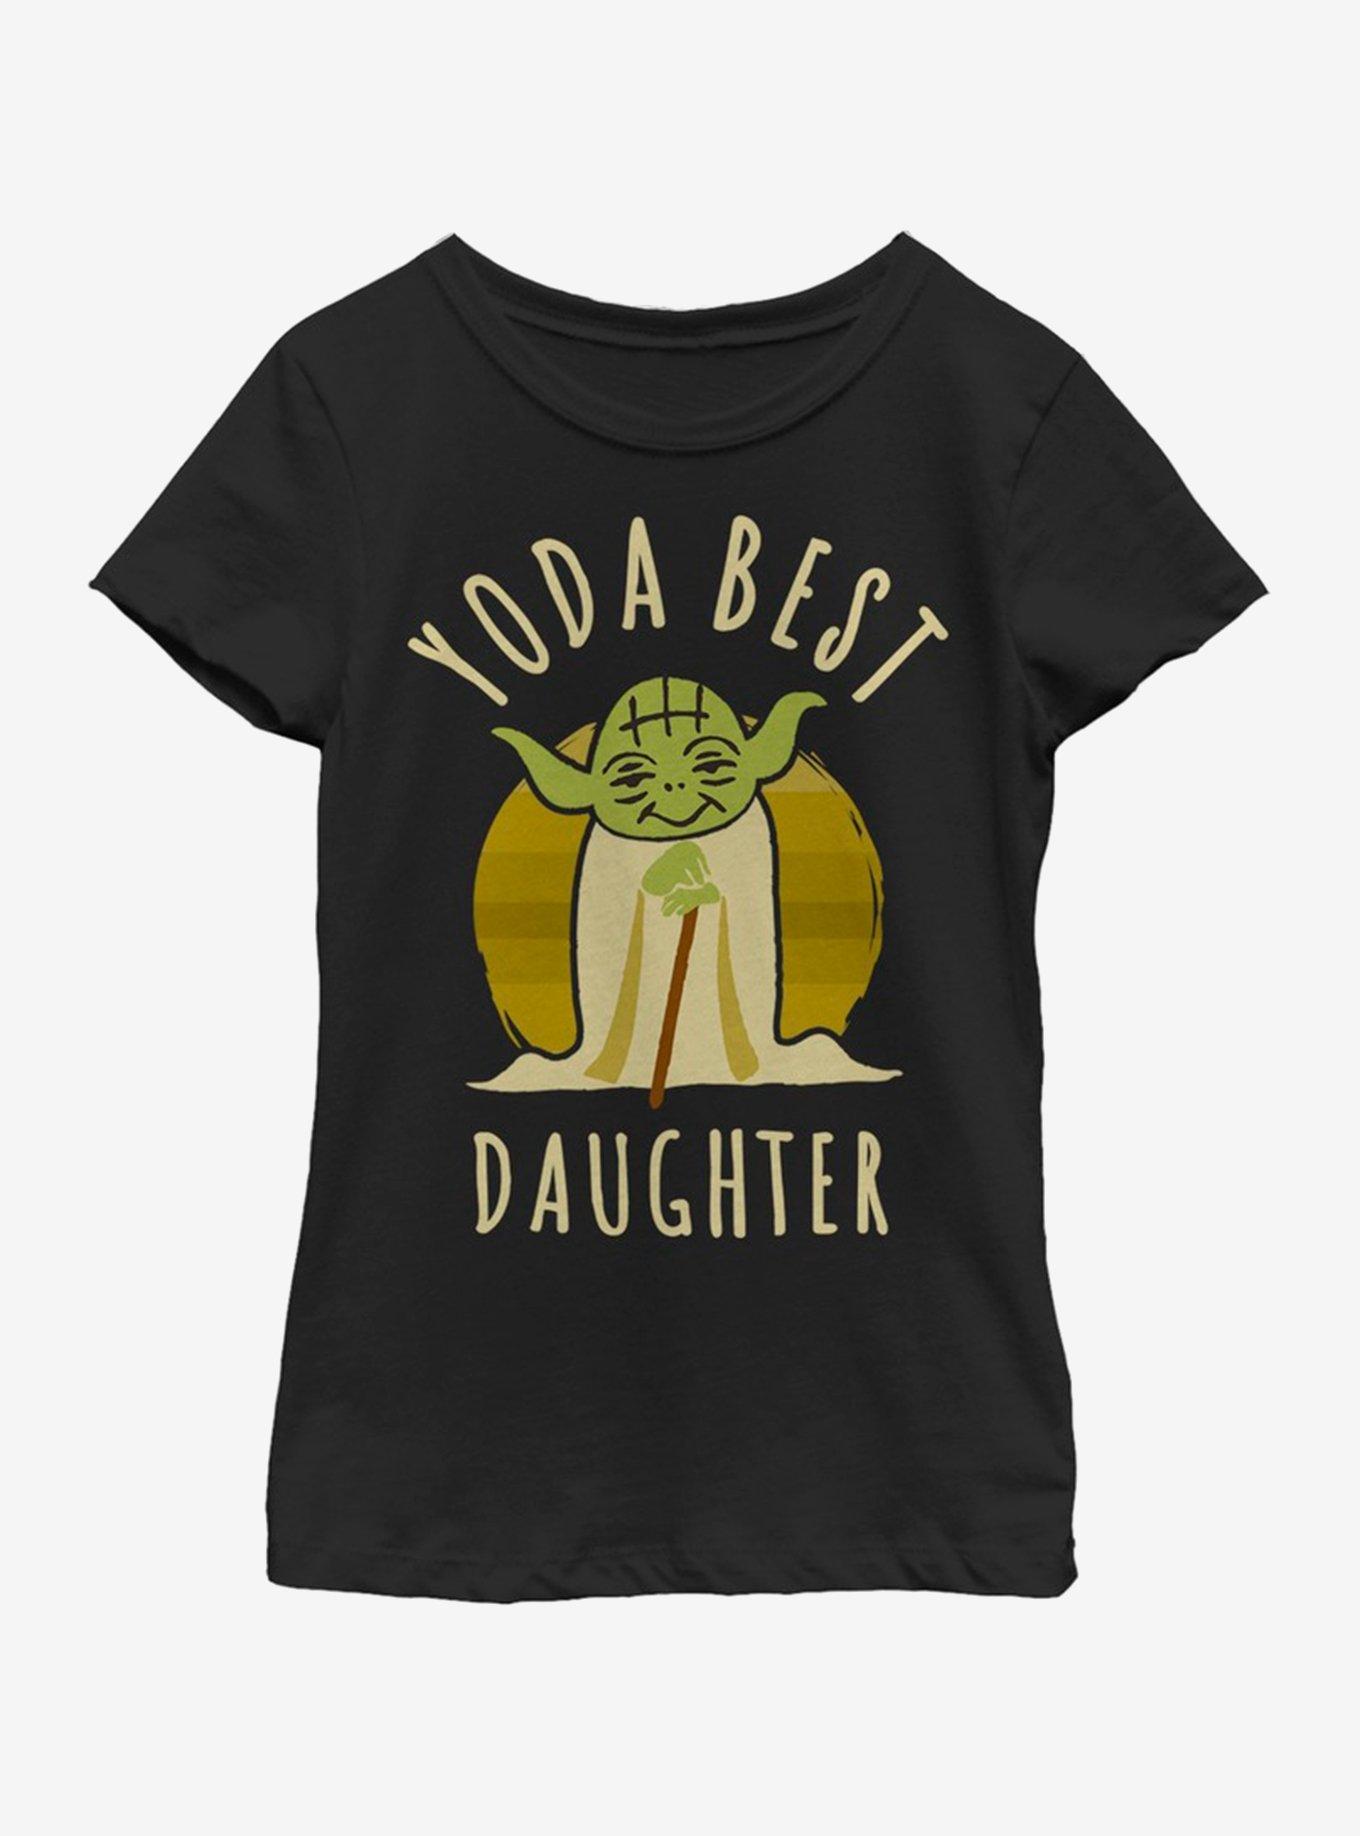 Star Wars Best Daughter Yoda Says Youth Girls T-Shirt, BLACK, hi-res